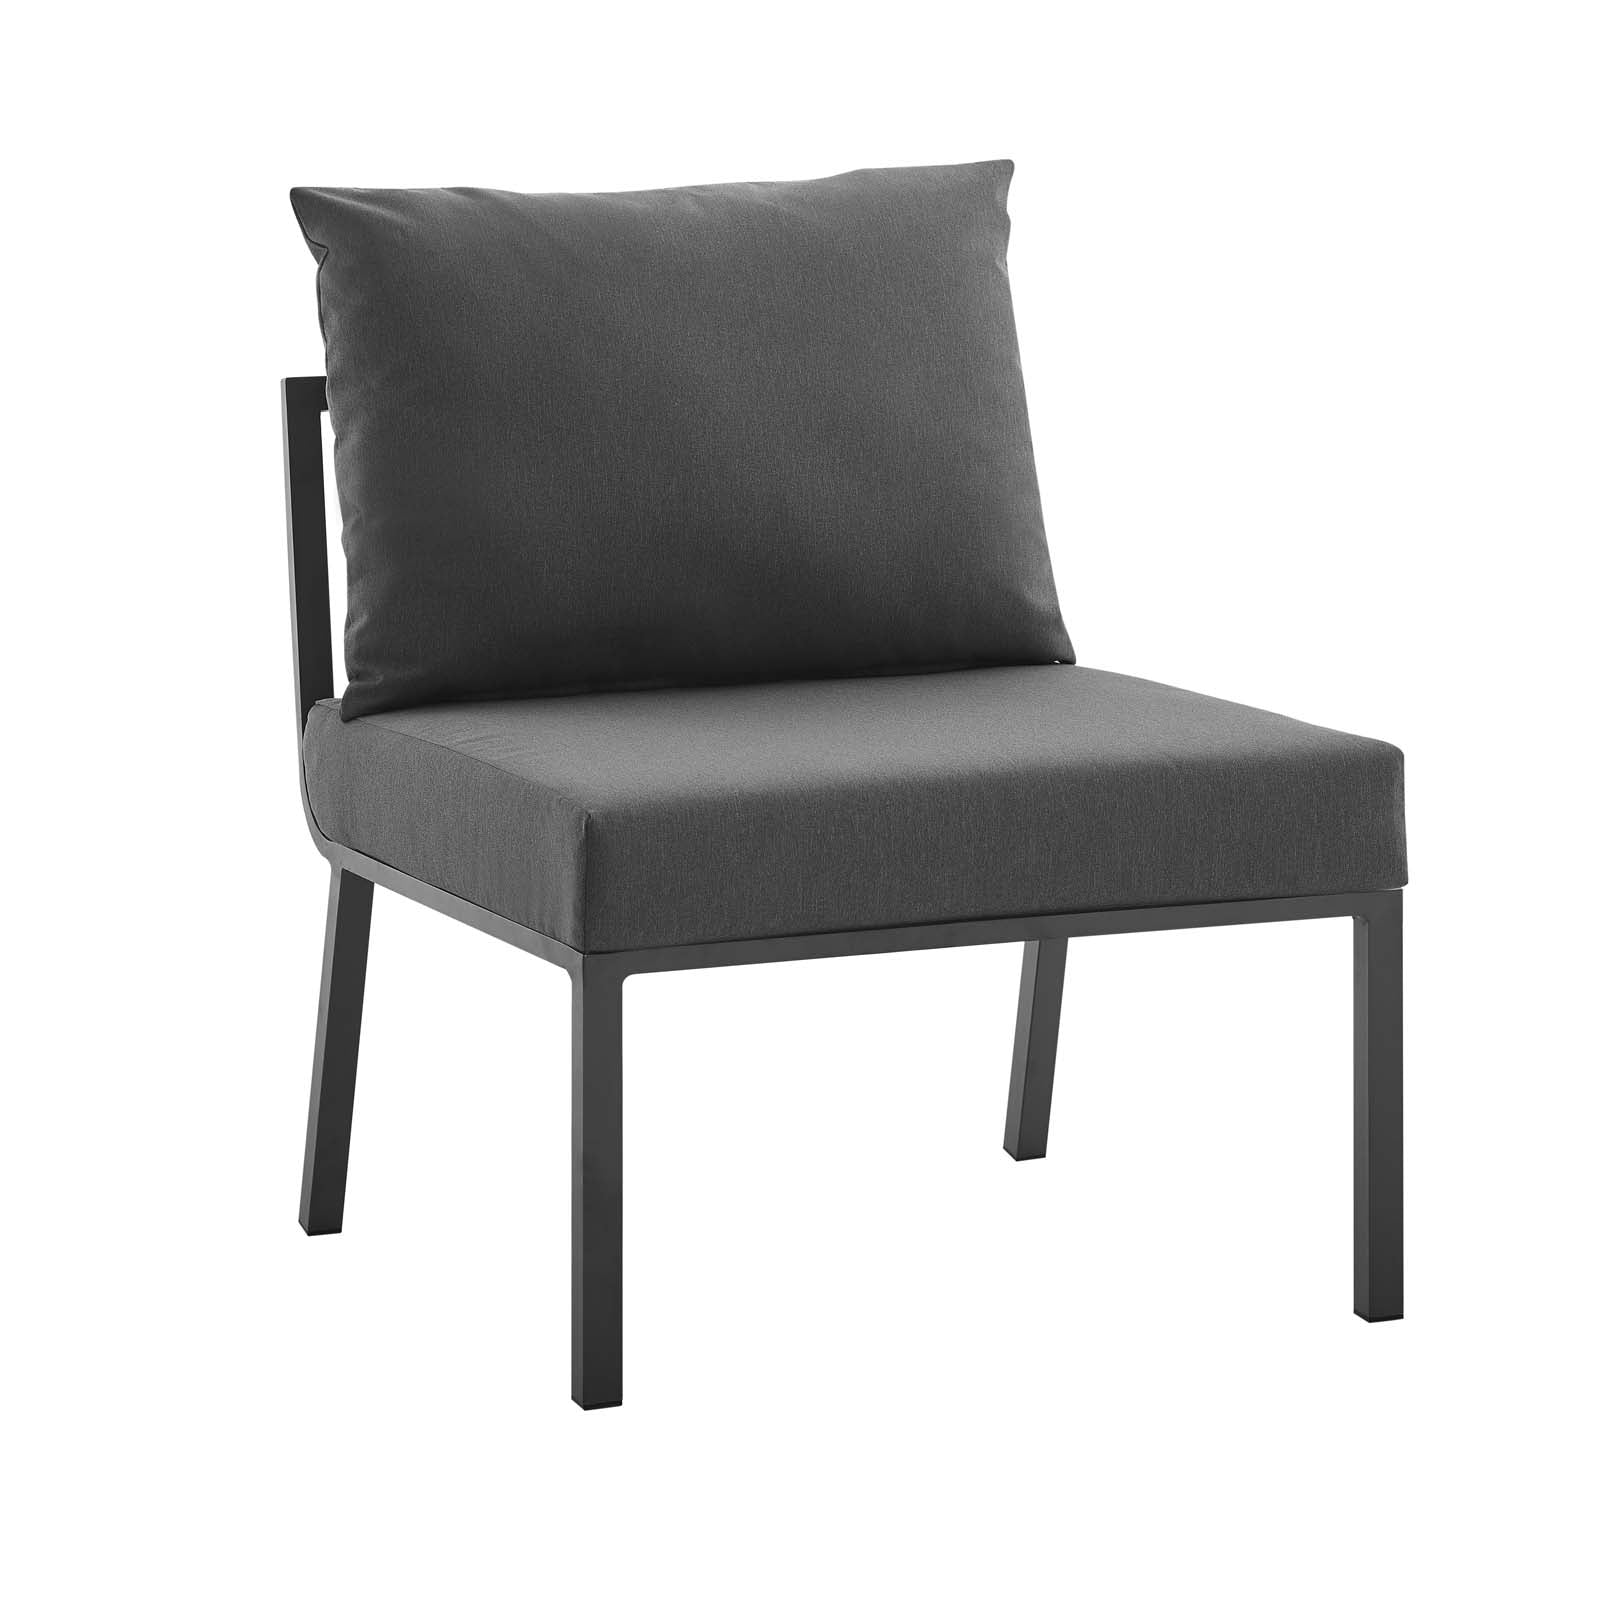 Modway Outdoor Conversation Sets - Riverside 3 Piece Outdoor Patio Aluminum Sectional Sofa Set Gray Charcoal